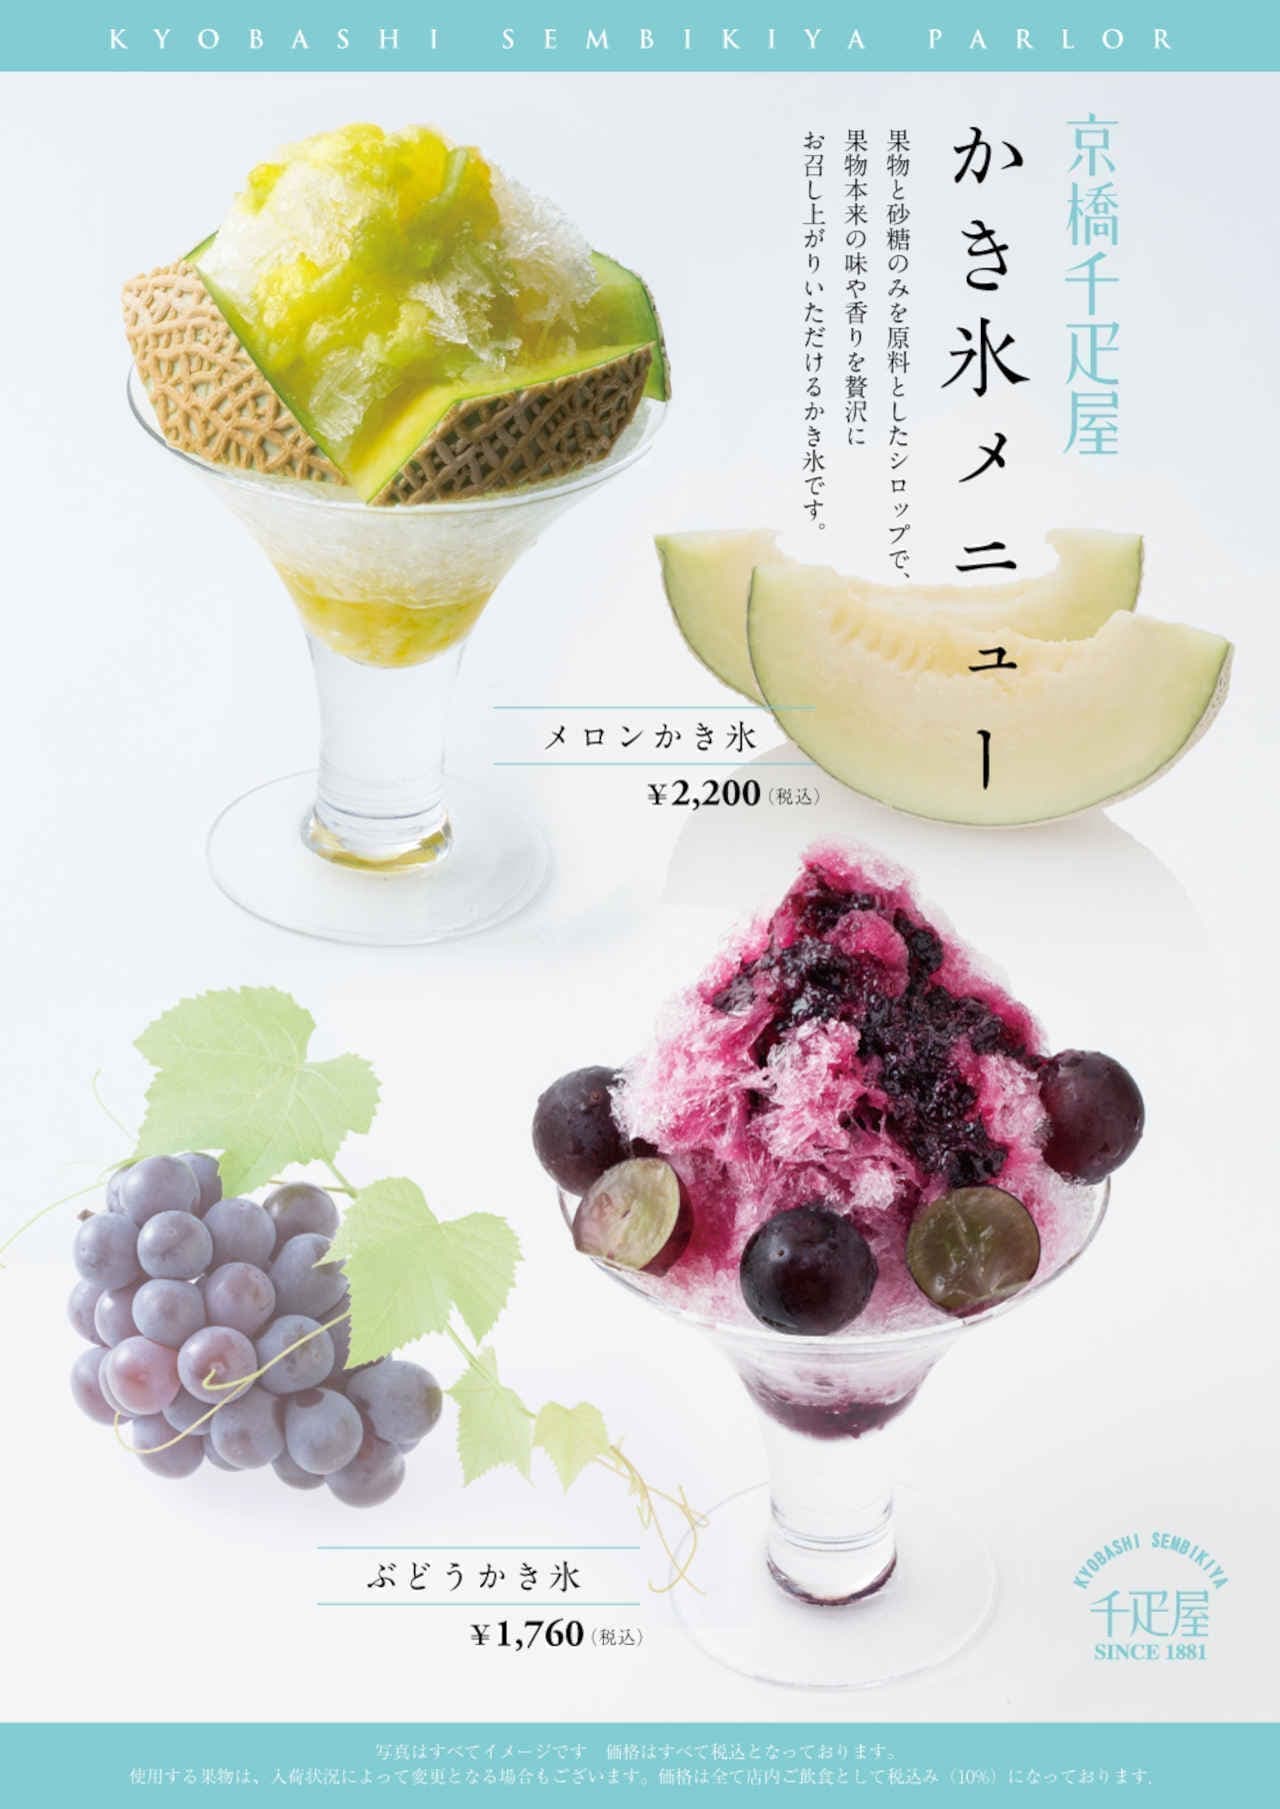 Kyobashi Senbiya "Melon Shaved Ice" "Grape Shaved Ice" for a limited time